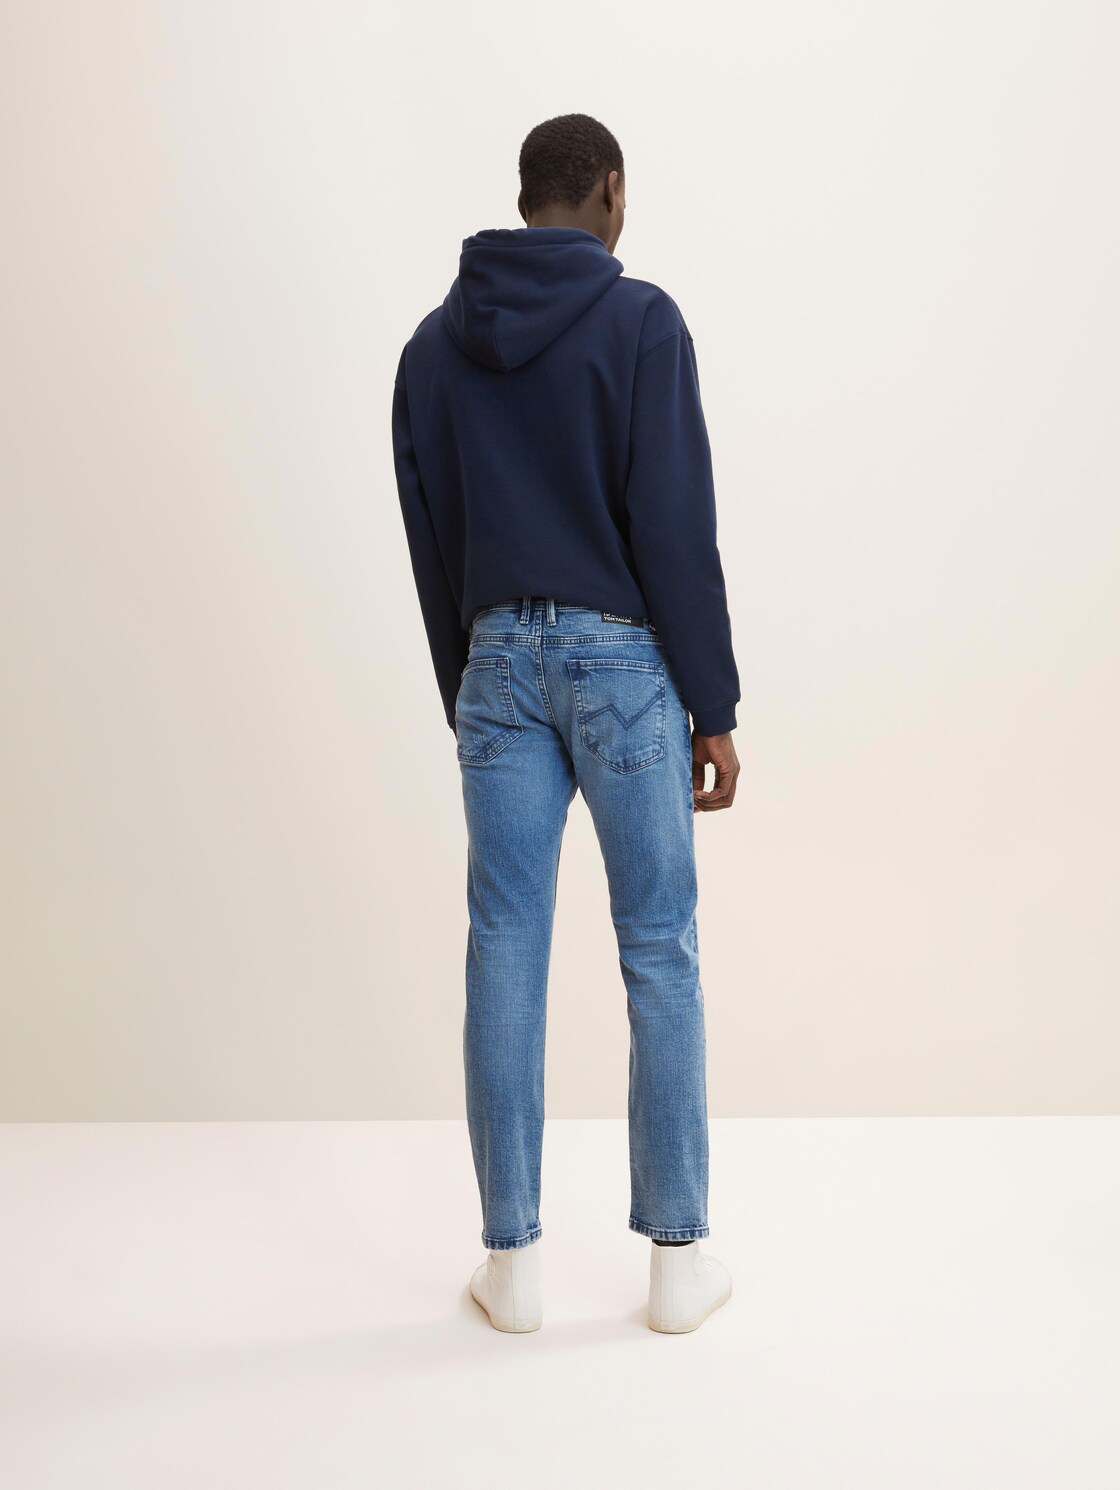 TOM TAILOR DENIM Herren Piers Slim Jeans, blau, Gr. 28/32 3